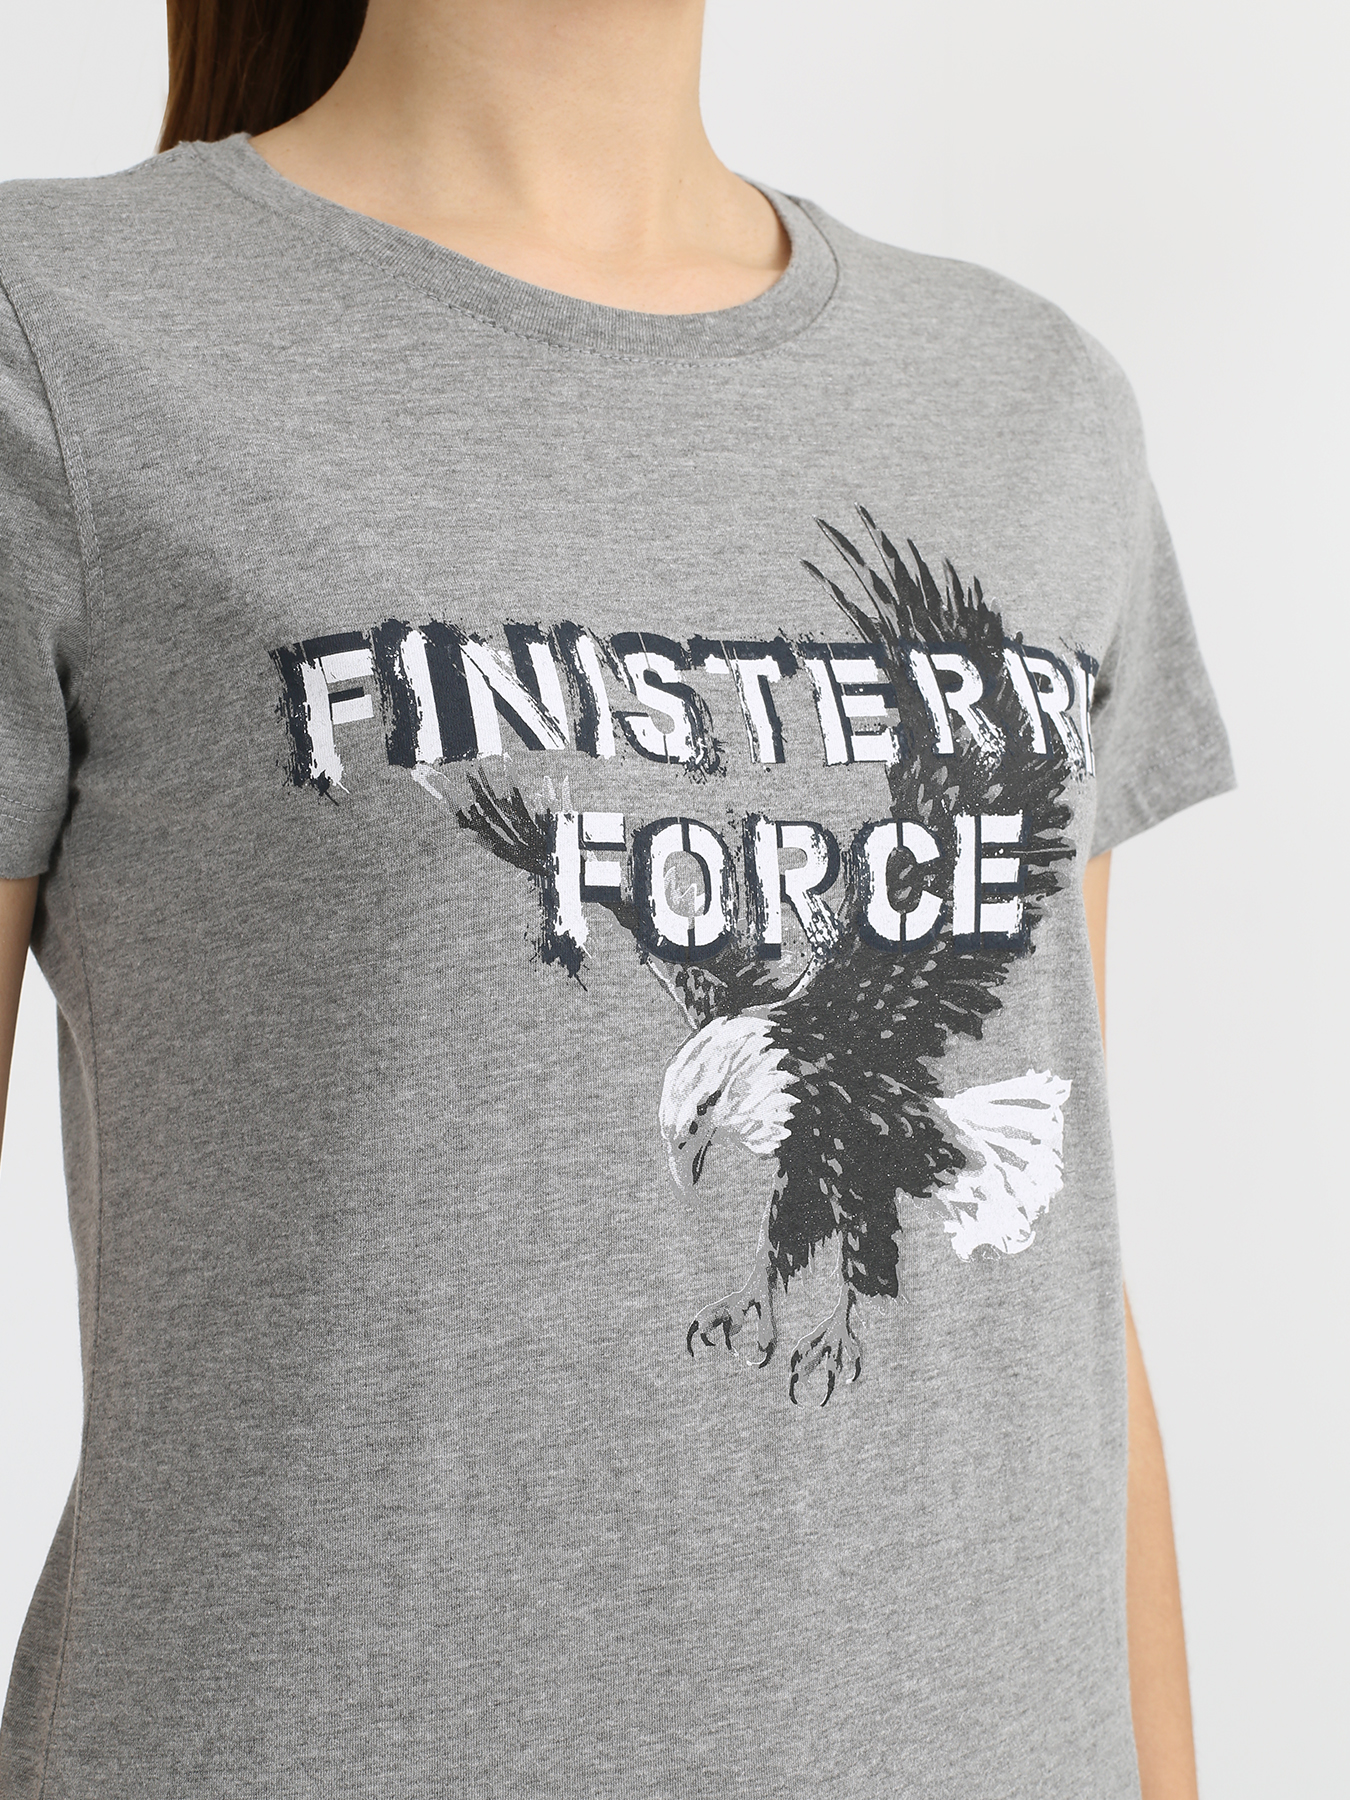 Finisterre Force Женская футболка 334264-021 Фото 3